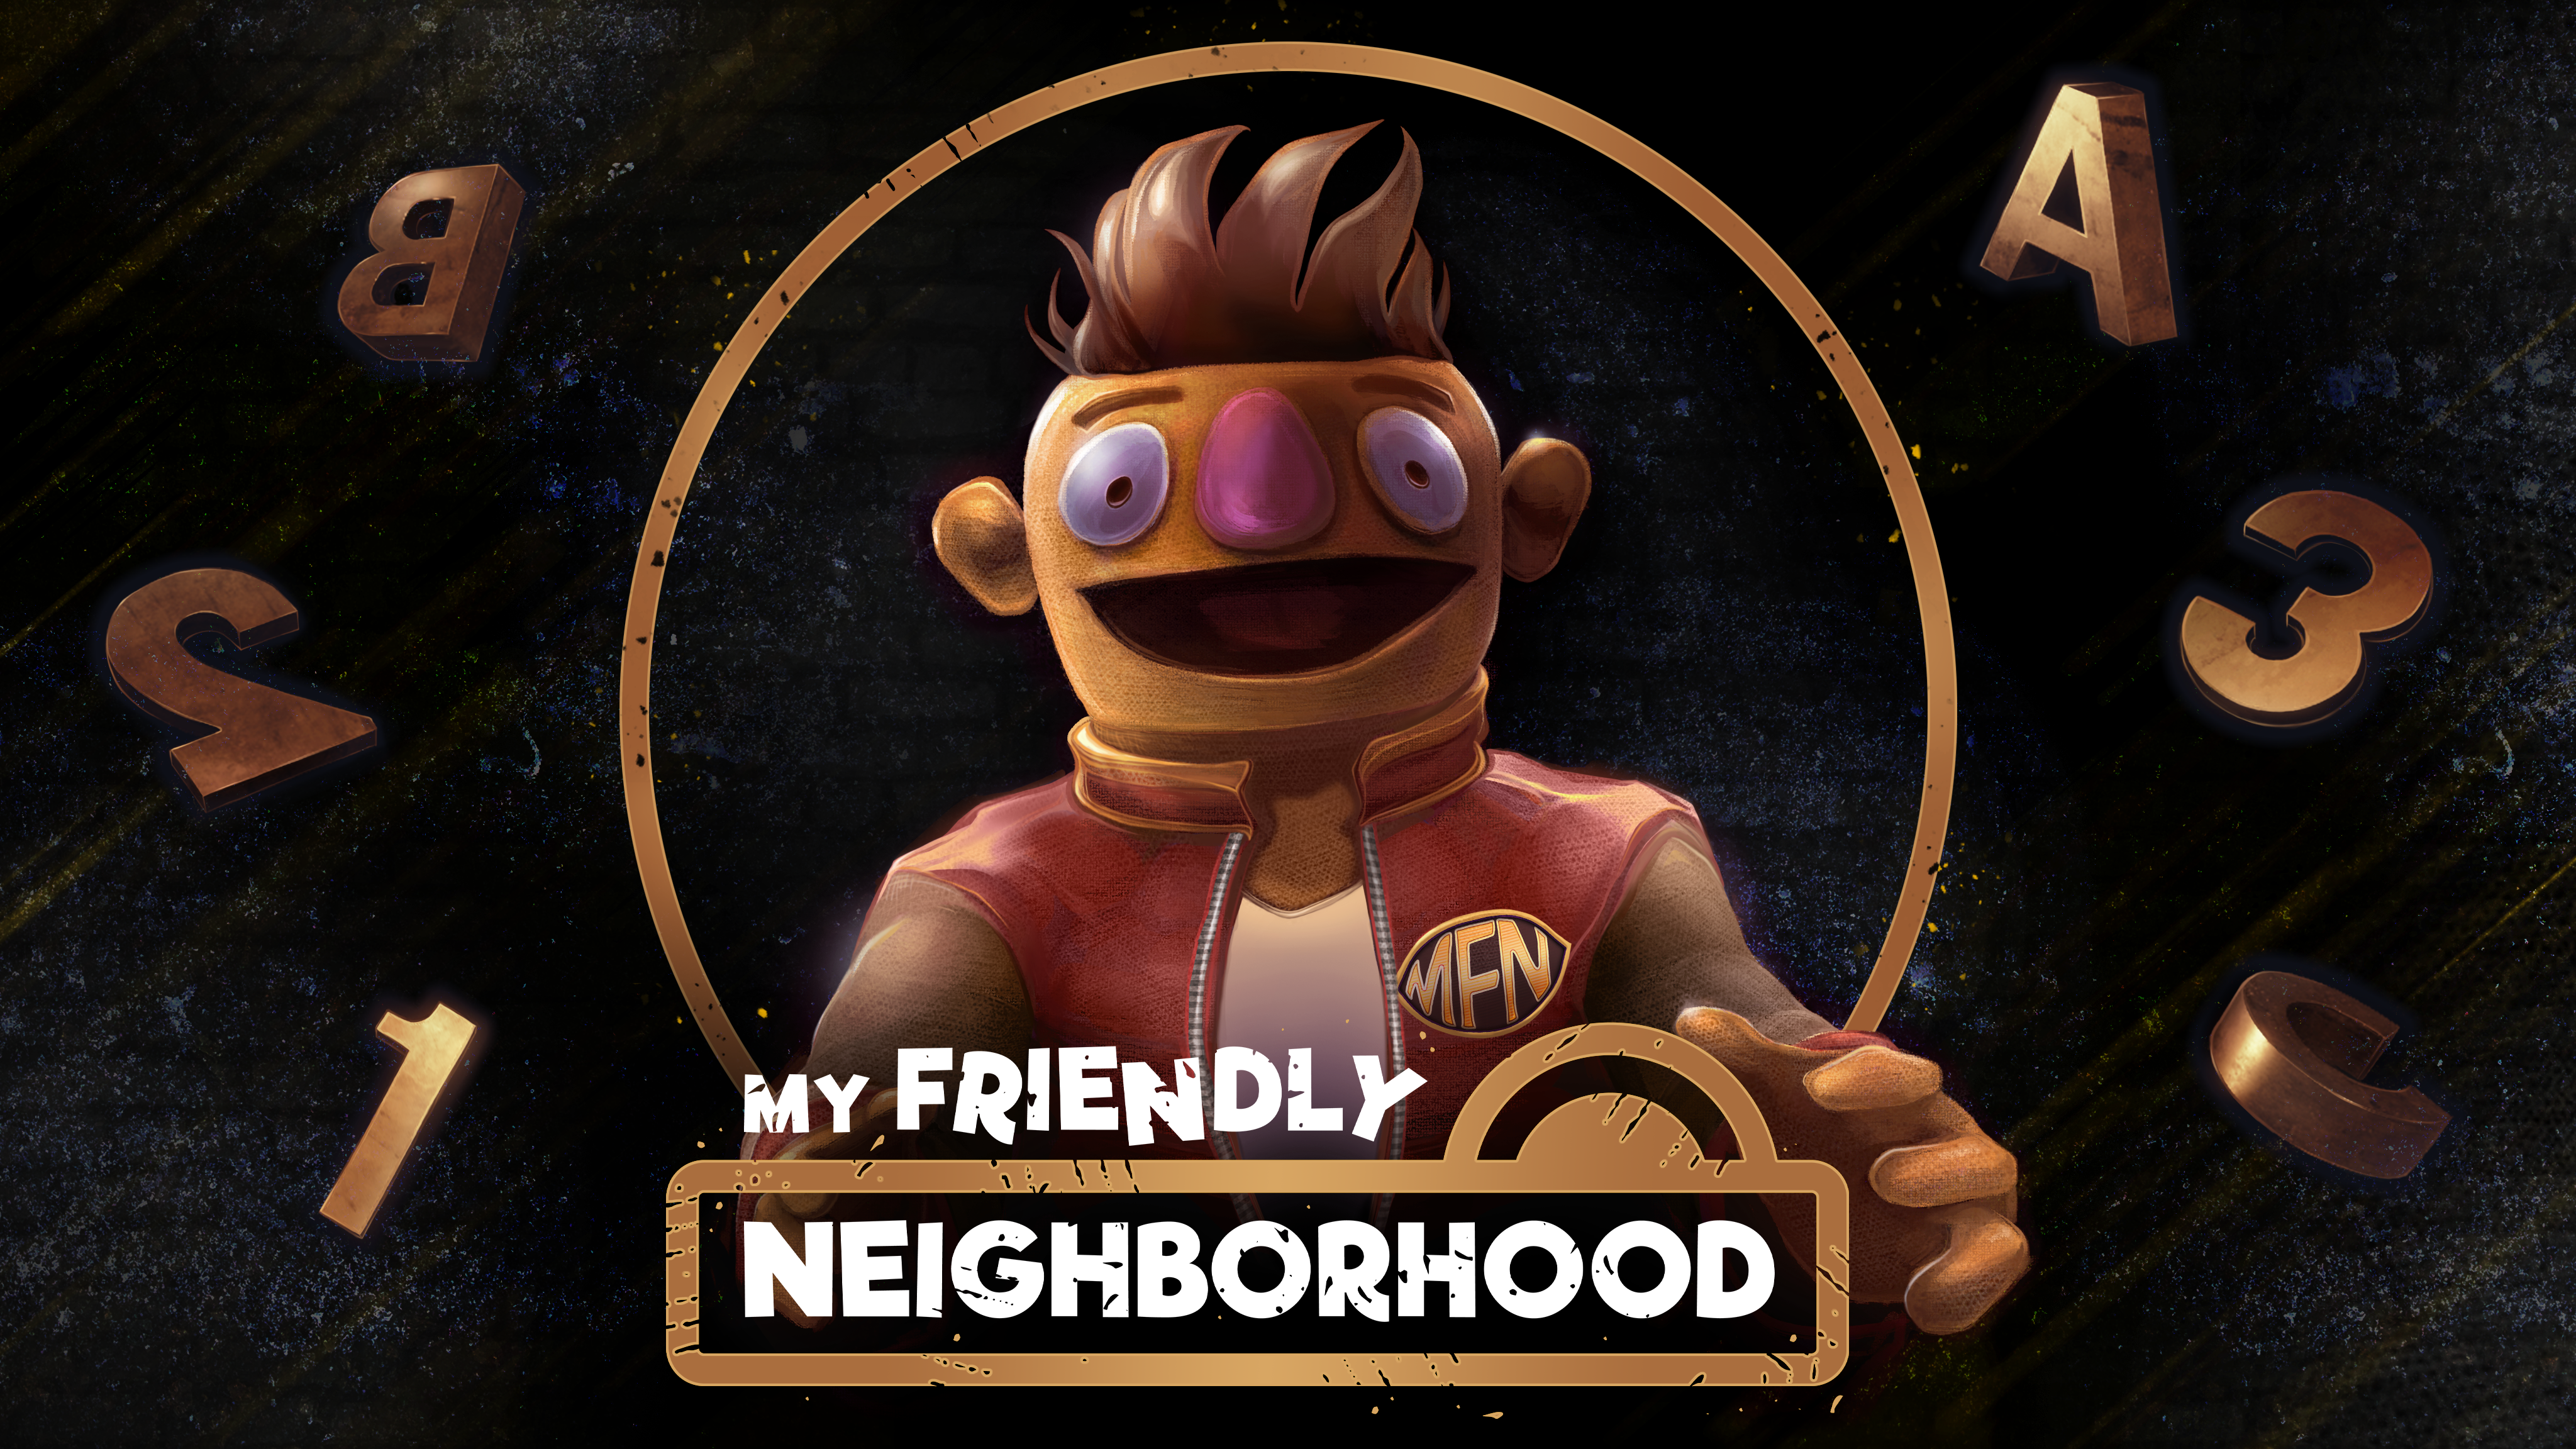 My friend french. My friendly neighborhood game. My friendly neighborhood логотип. Май френдли нейборхуд. My friendly neighborhood Demo.